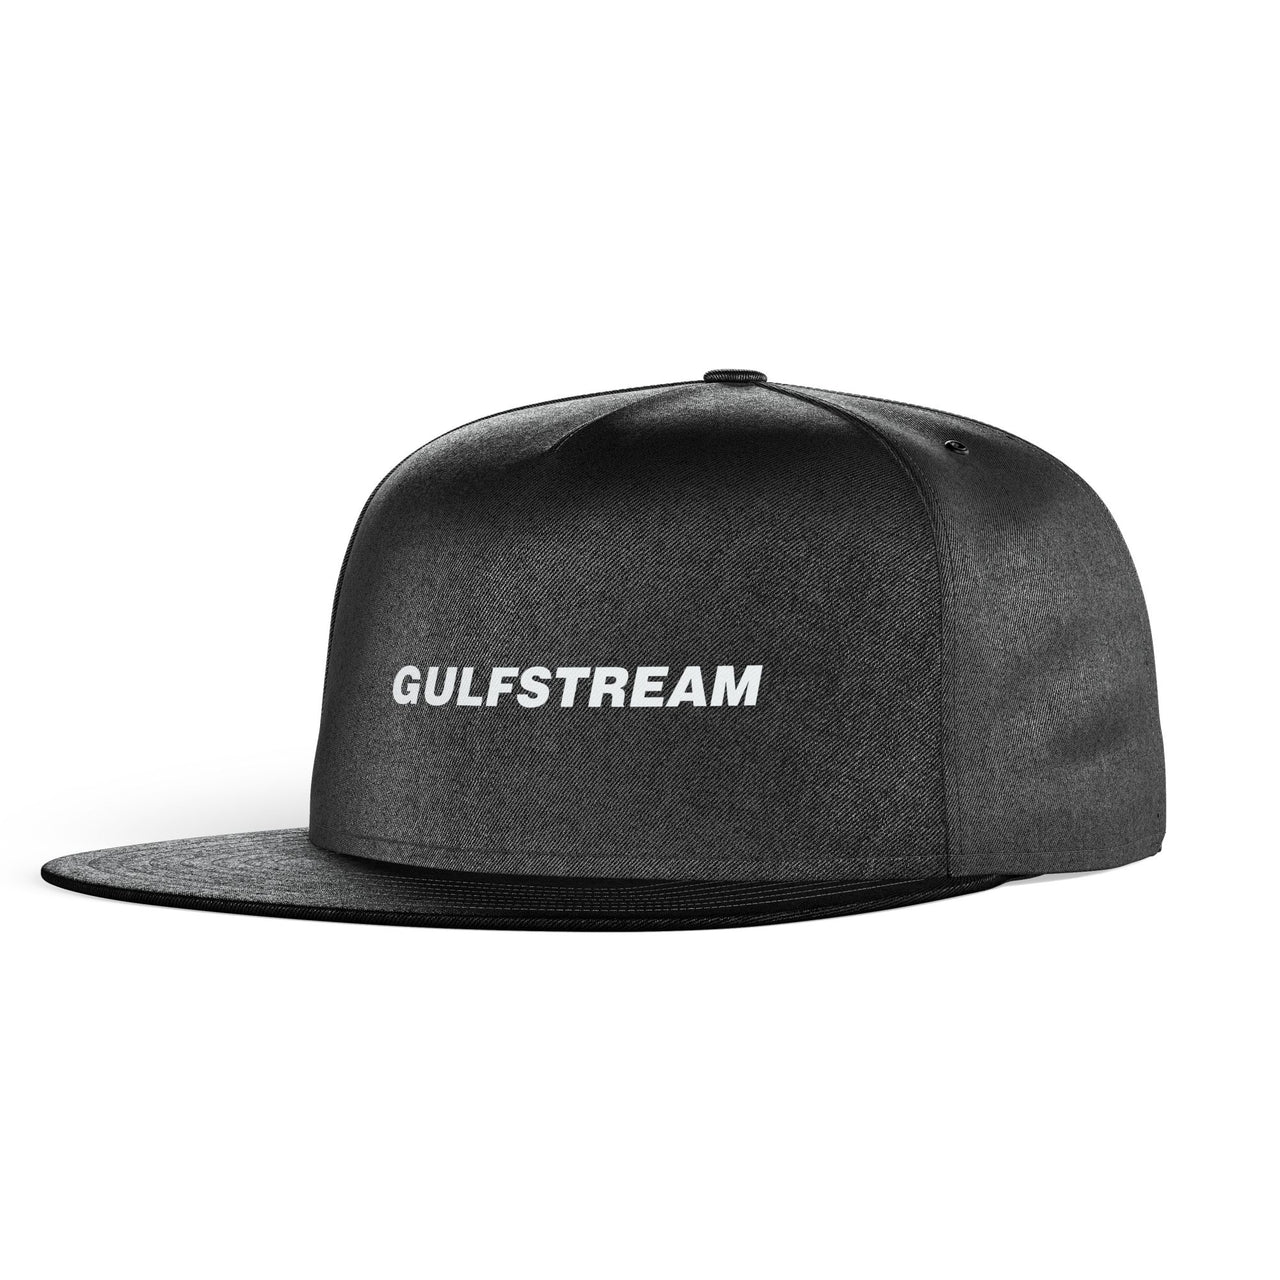 Gulfstream & Text Designed Snapback Caps & Hats